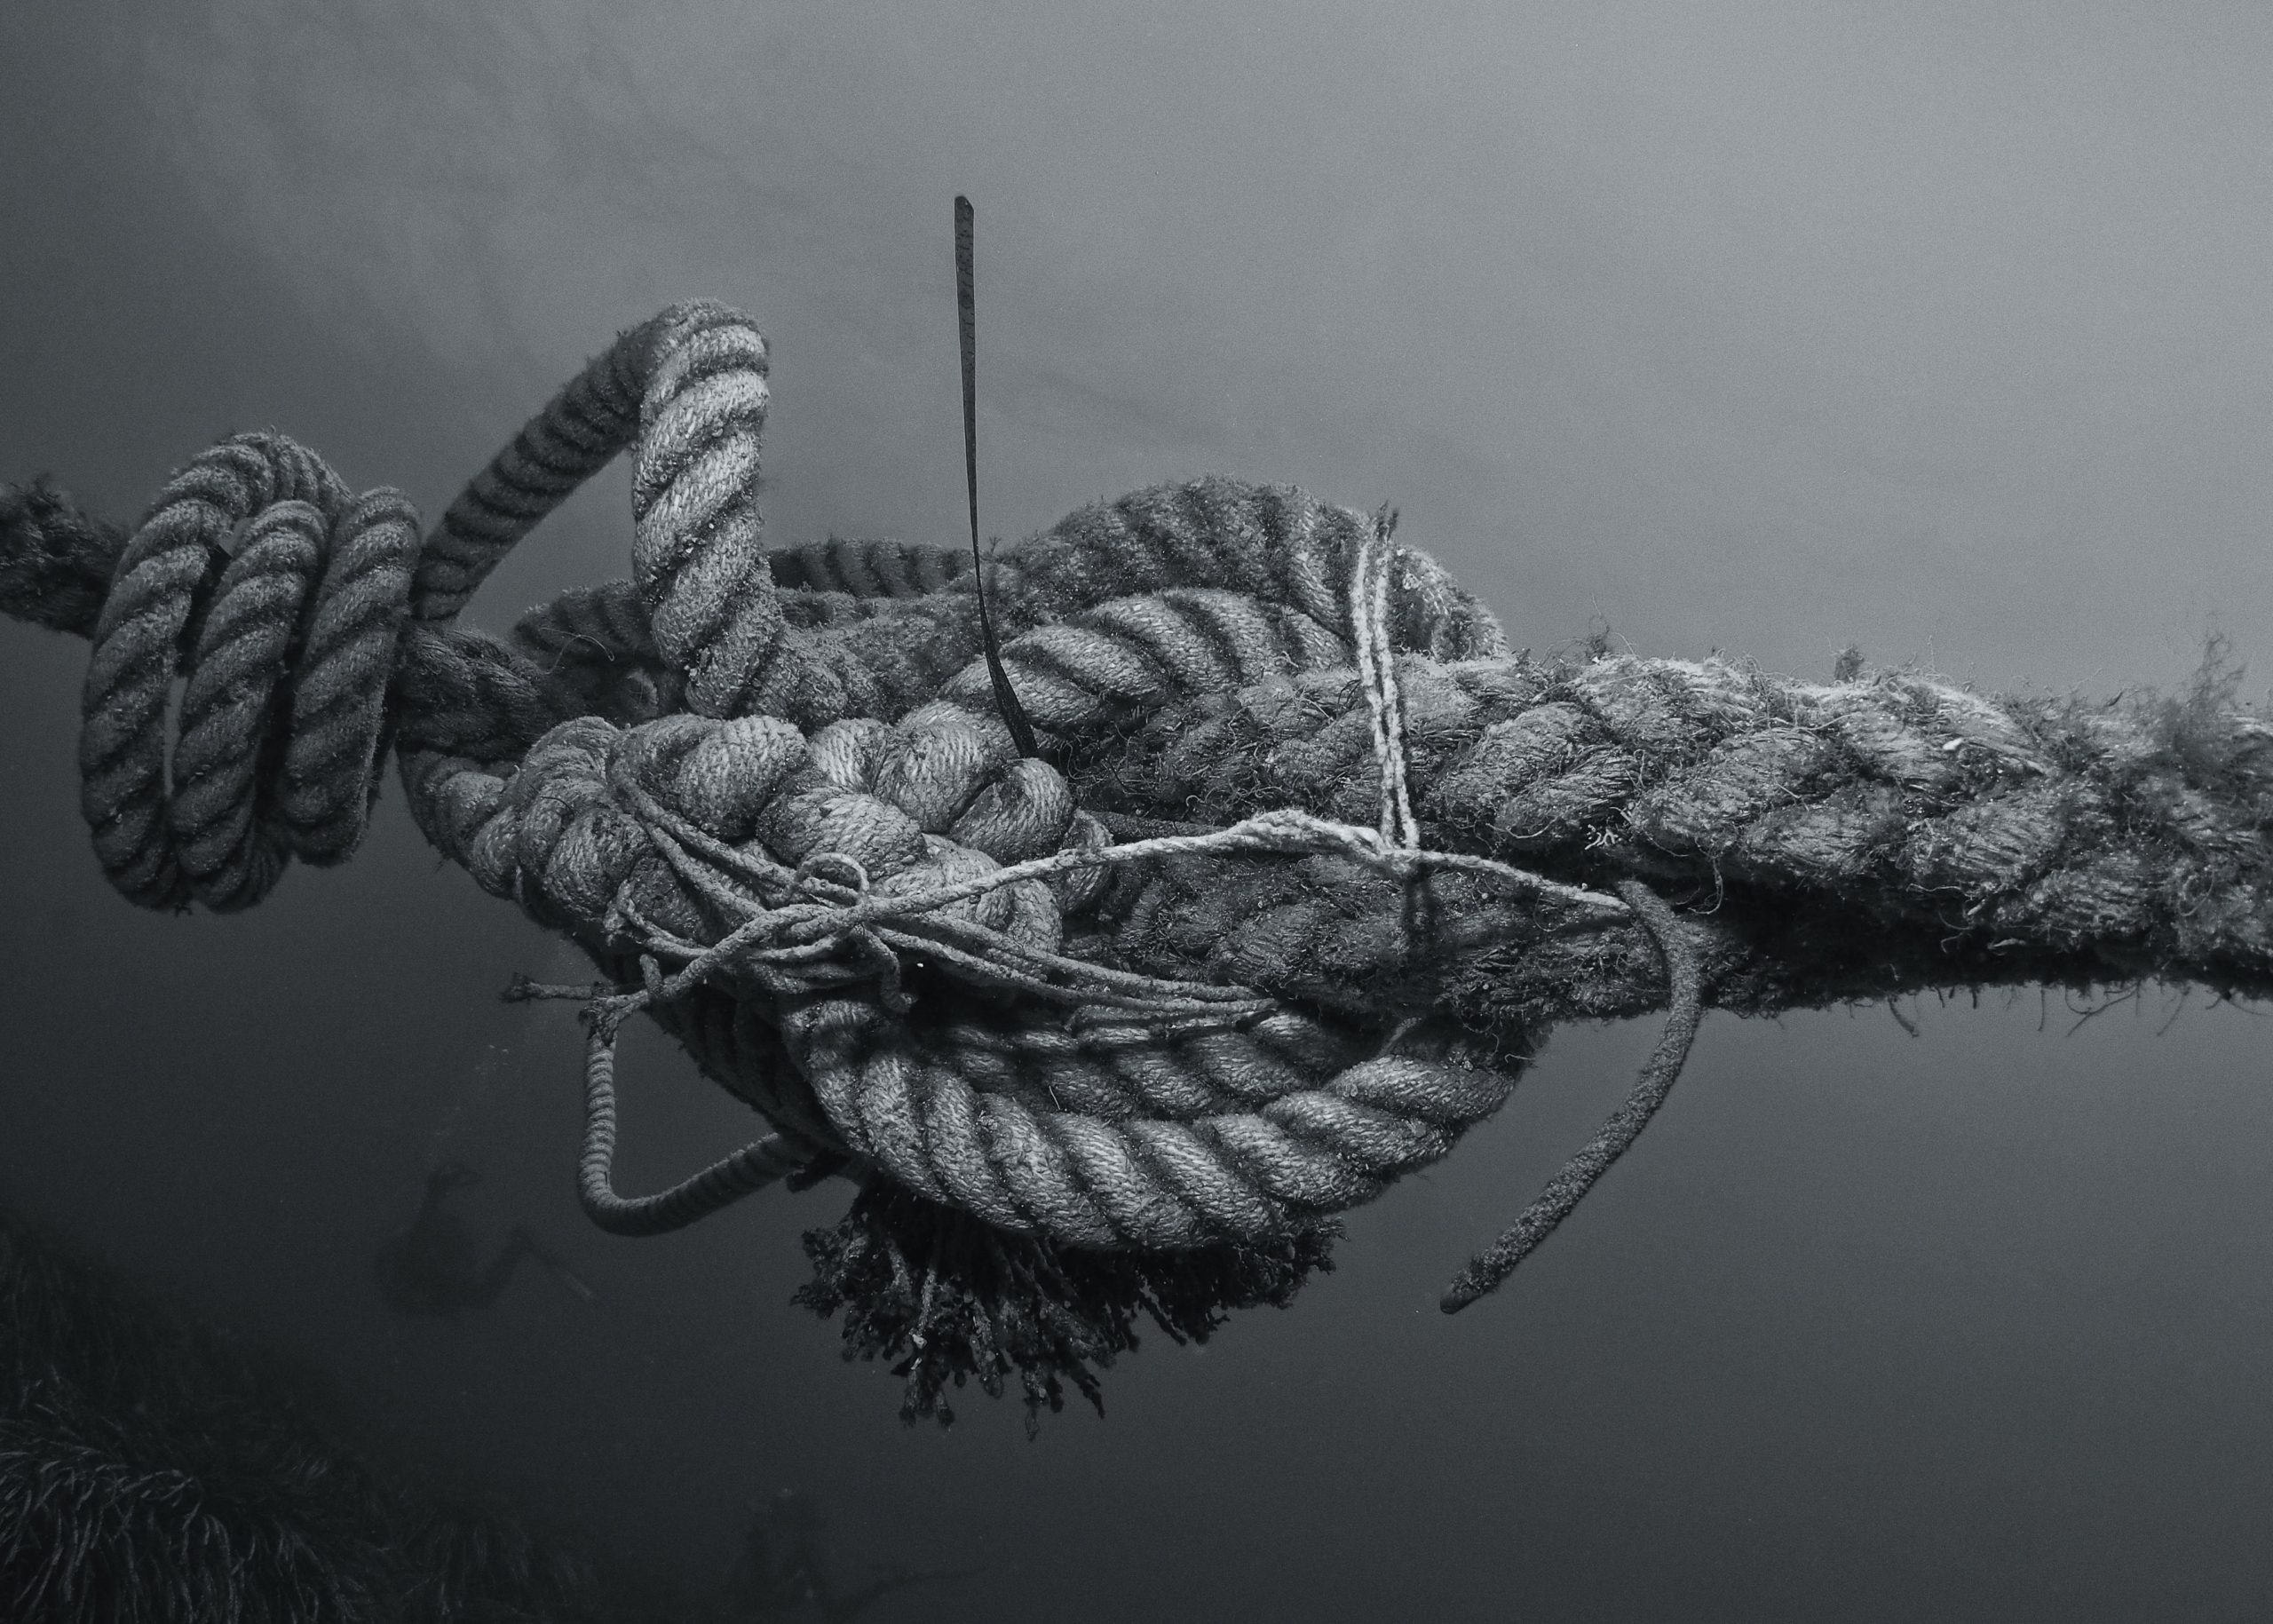 tangled rope representing vignettes